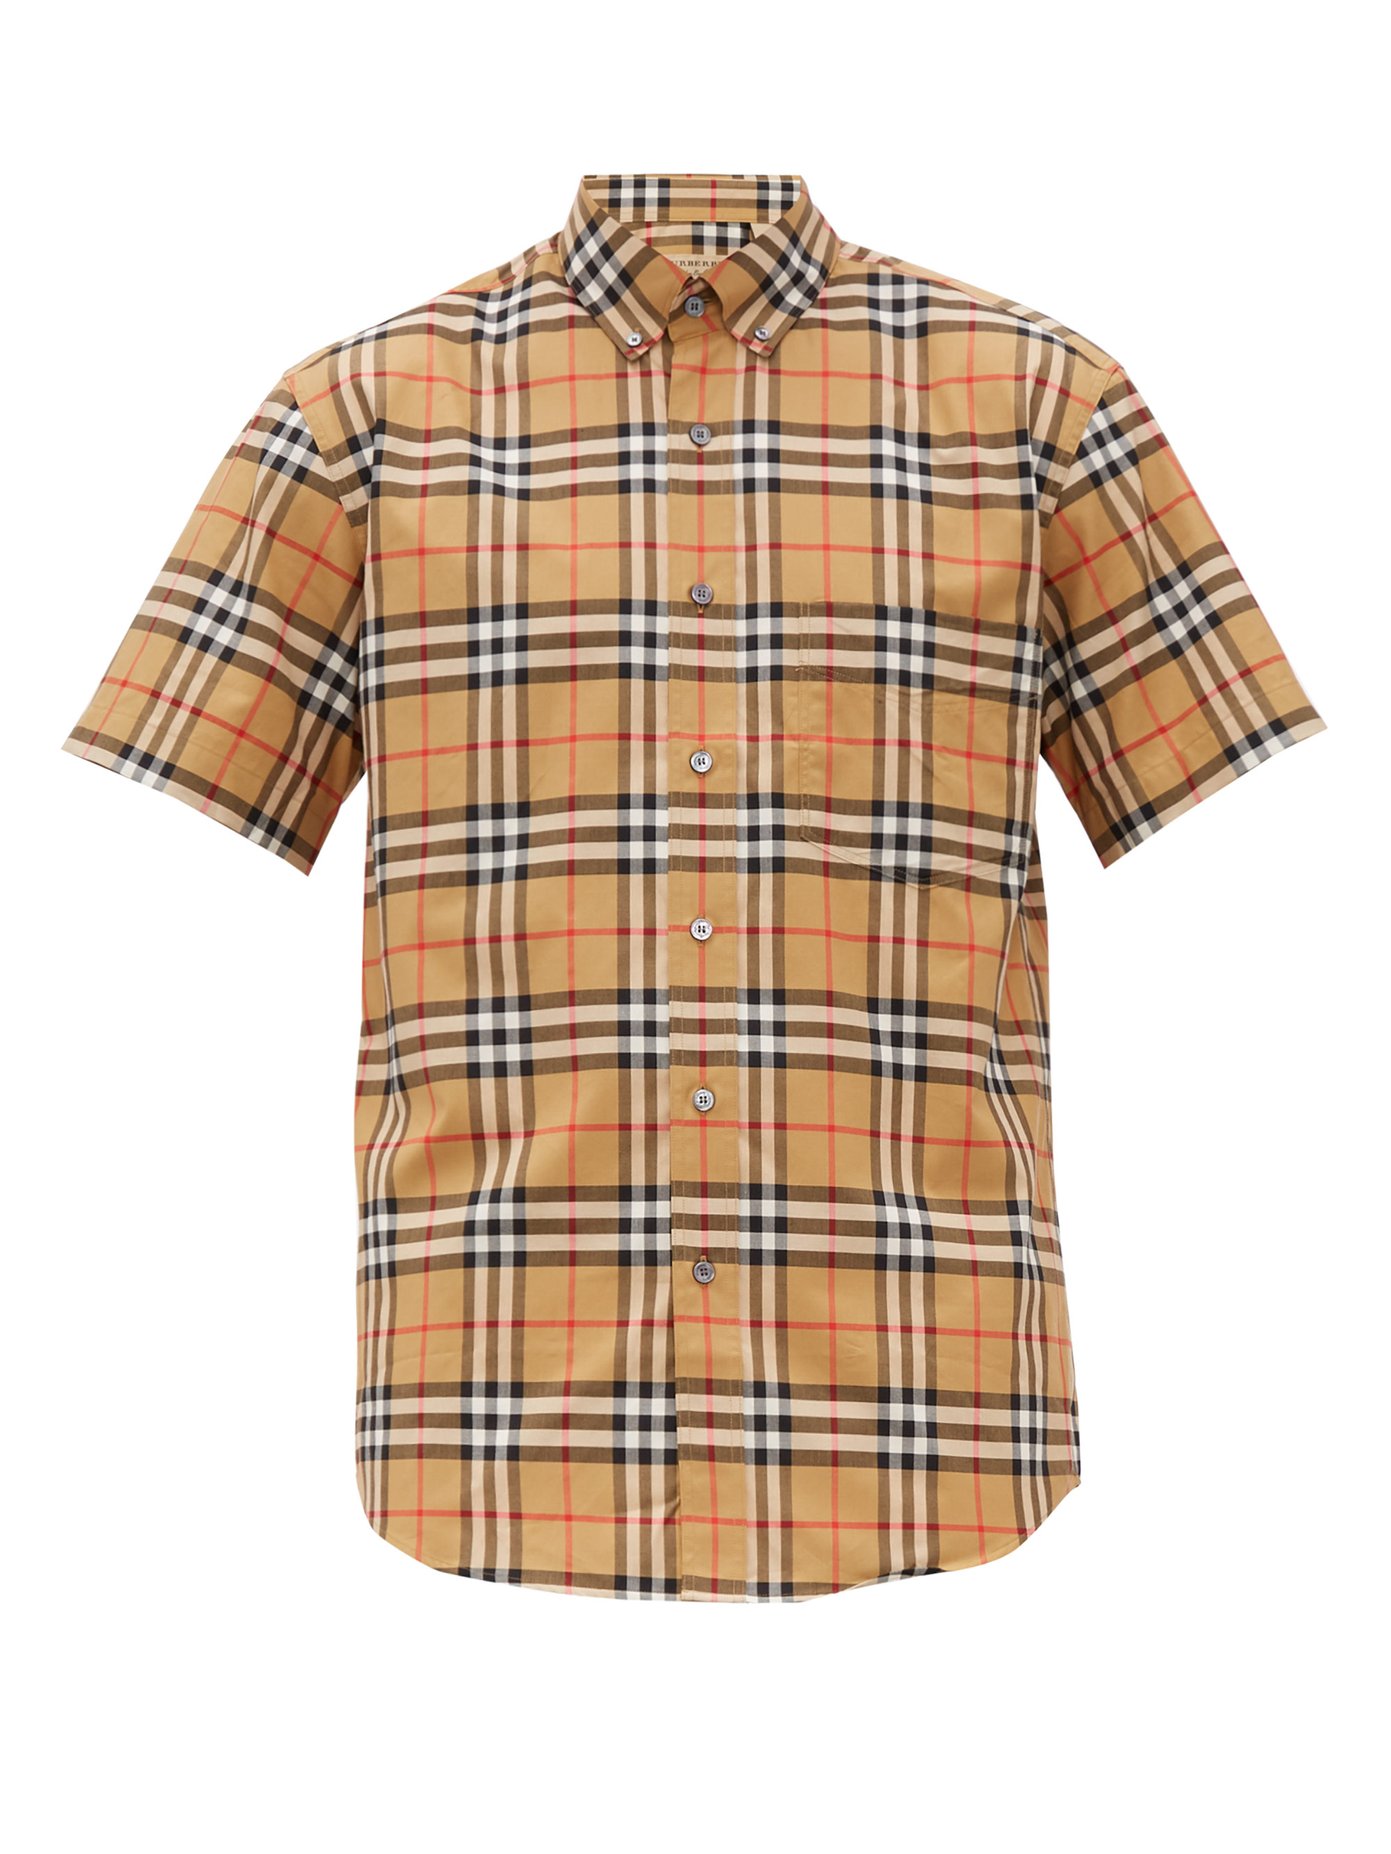 burberry style shirt cheap